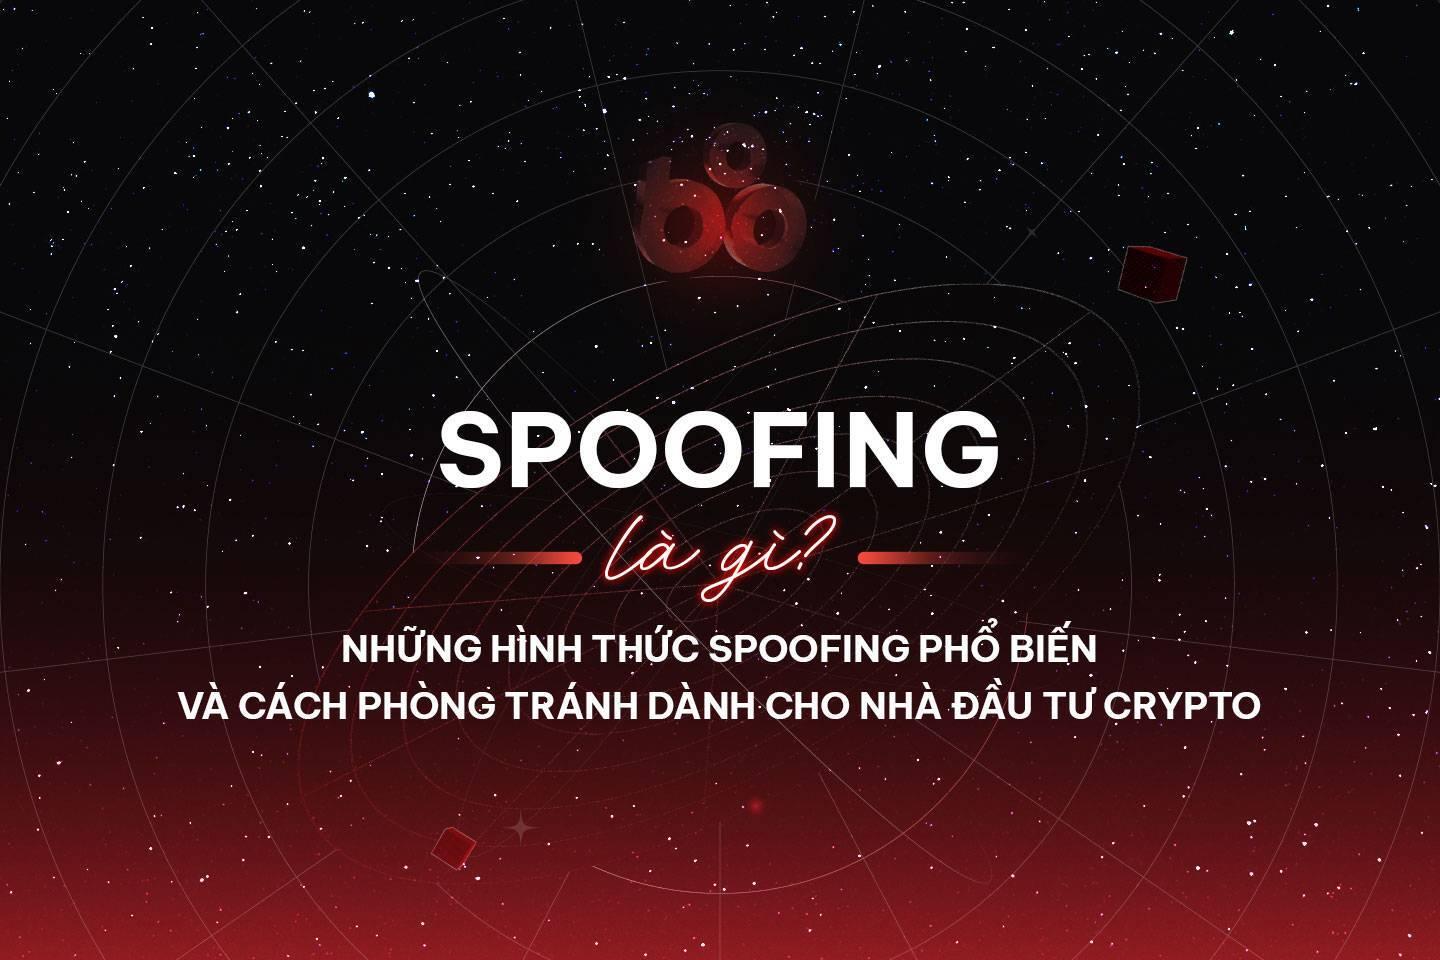 spoofing-la-gi-nhung-hinh-thuc-spoofing-pho-bien-va-cach-phong-tranh-danh-cho-nha-dau-tu-crypto